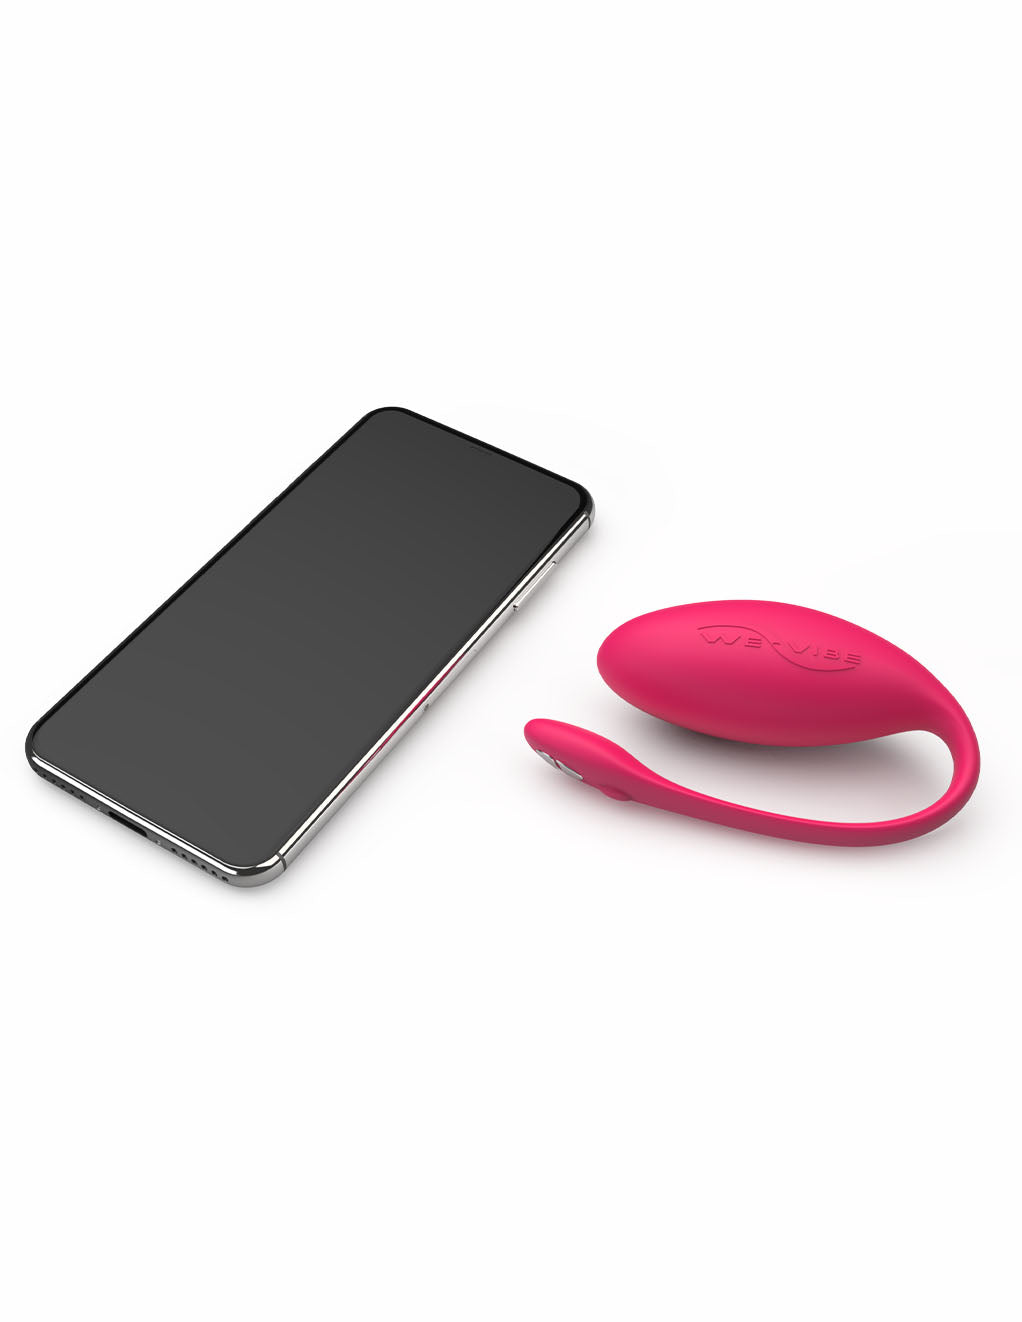 We-Vibe Jive Wearable Bluetooth Vibrator- Next to phone